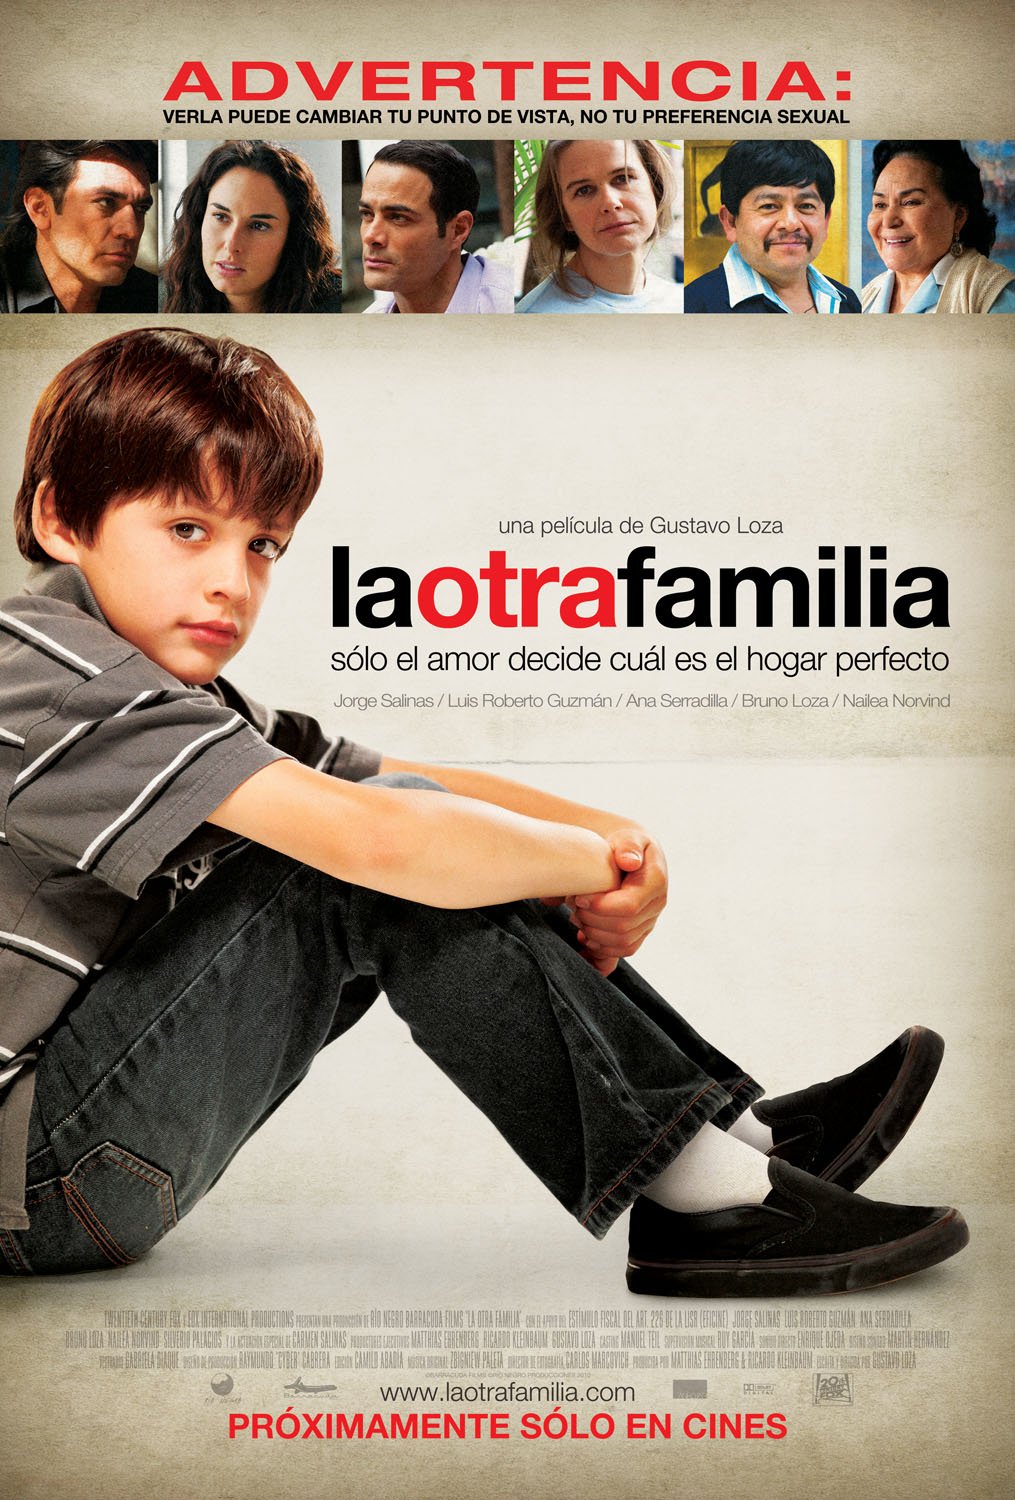 Extra Large Movie Poster Image for La otra familia (#1 of 5)